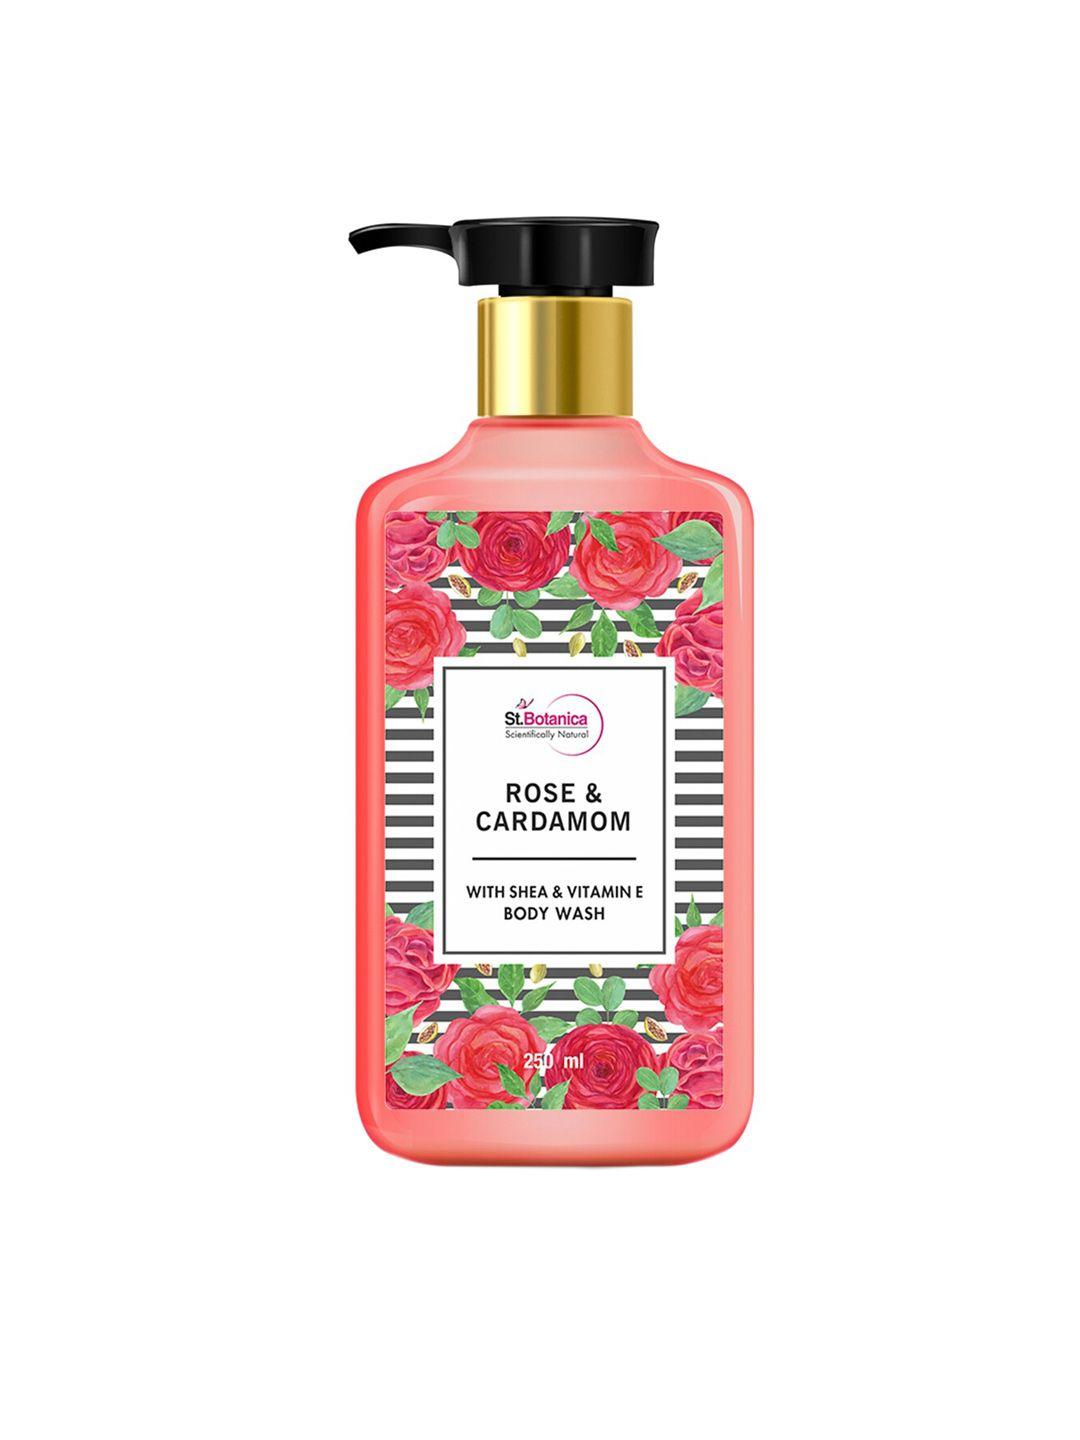 st.botanica rose & cardamom body wash with shea & vitamin e shower gel 250 ml